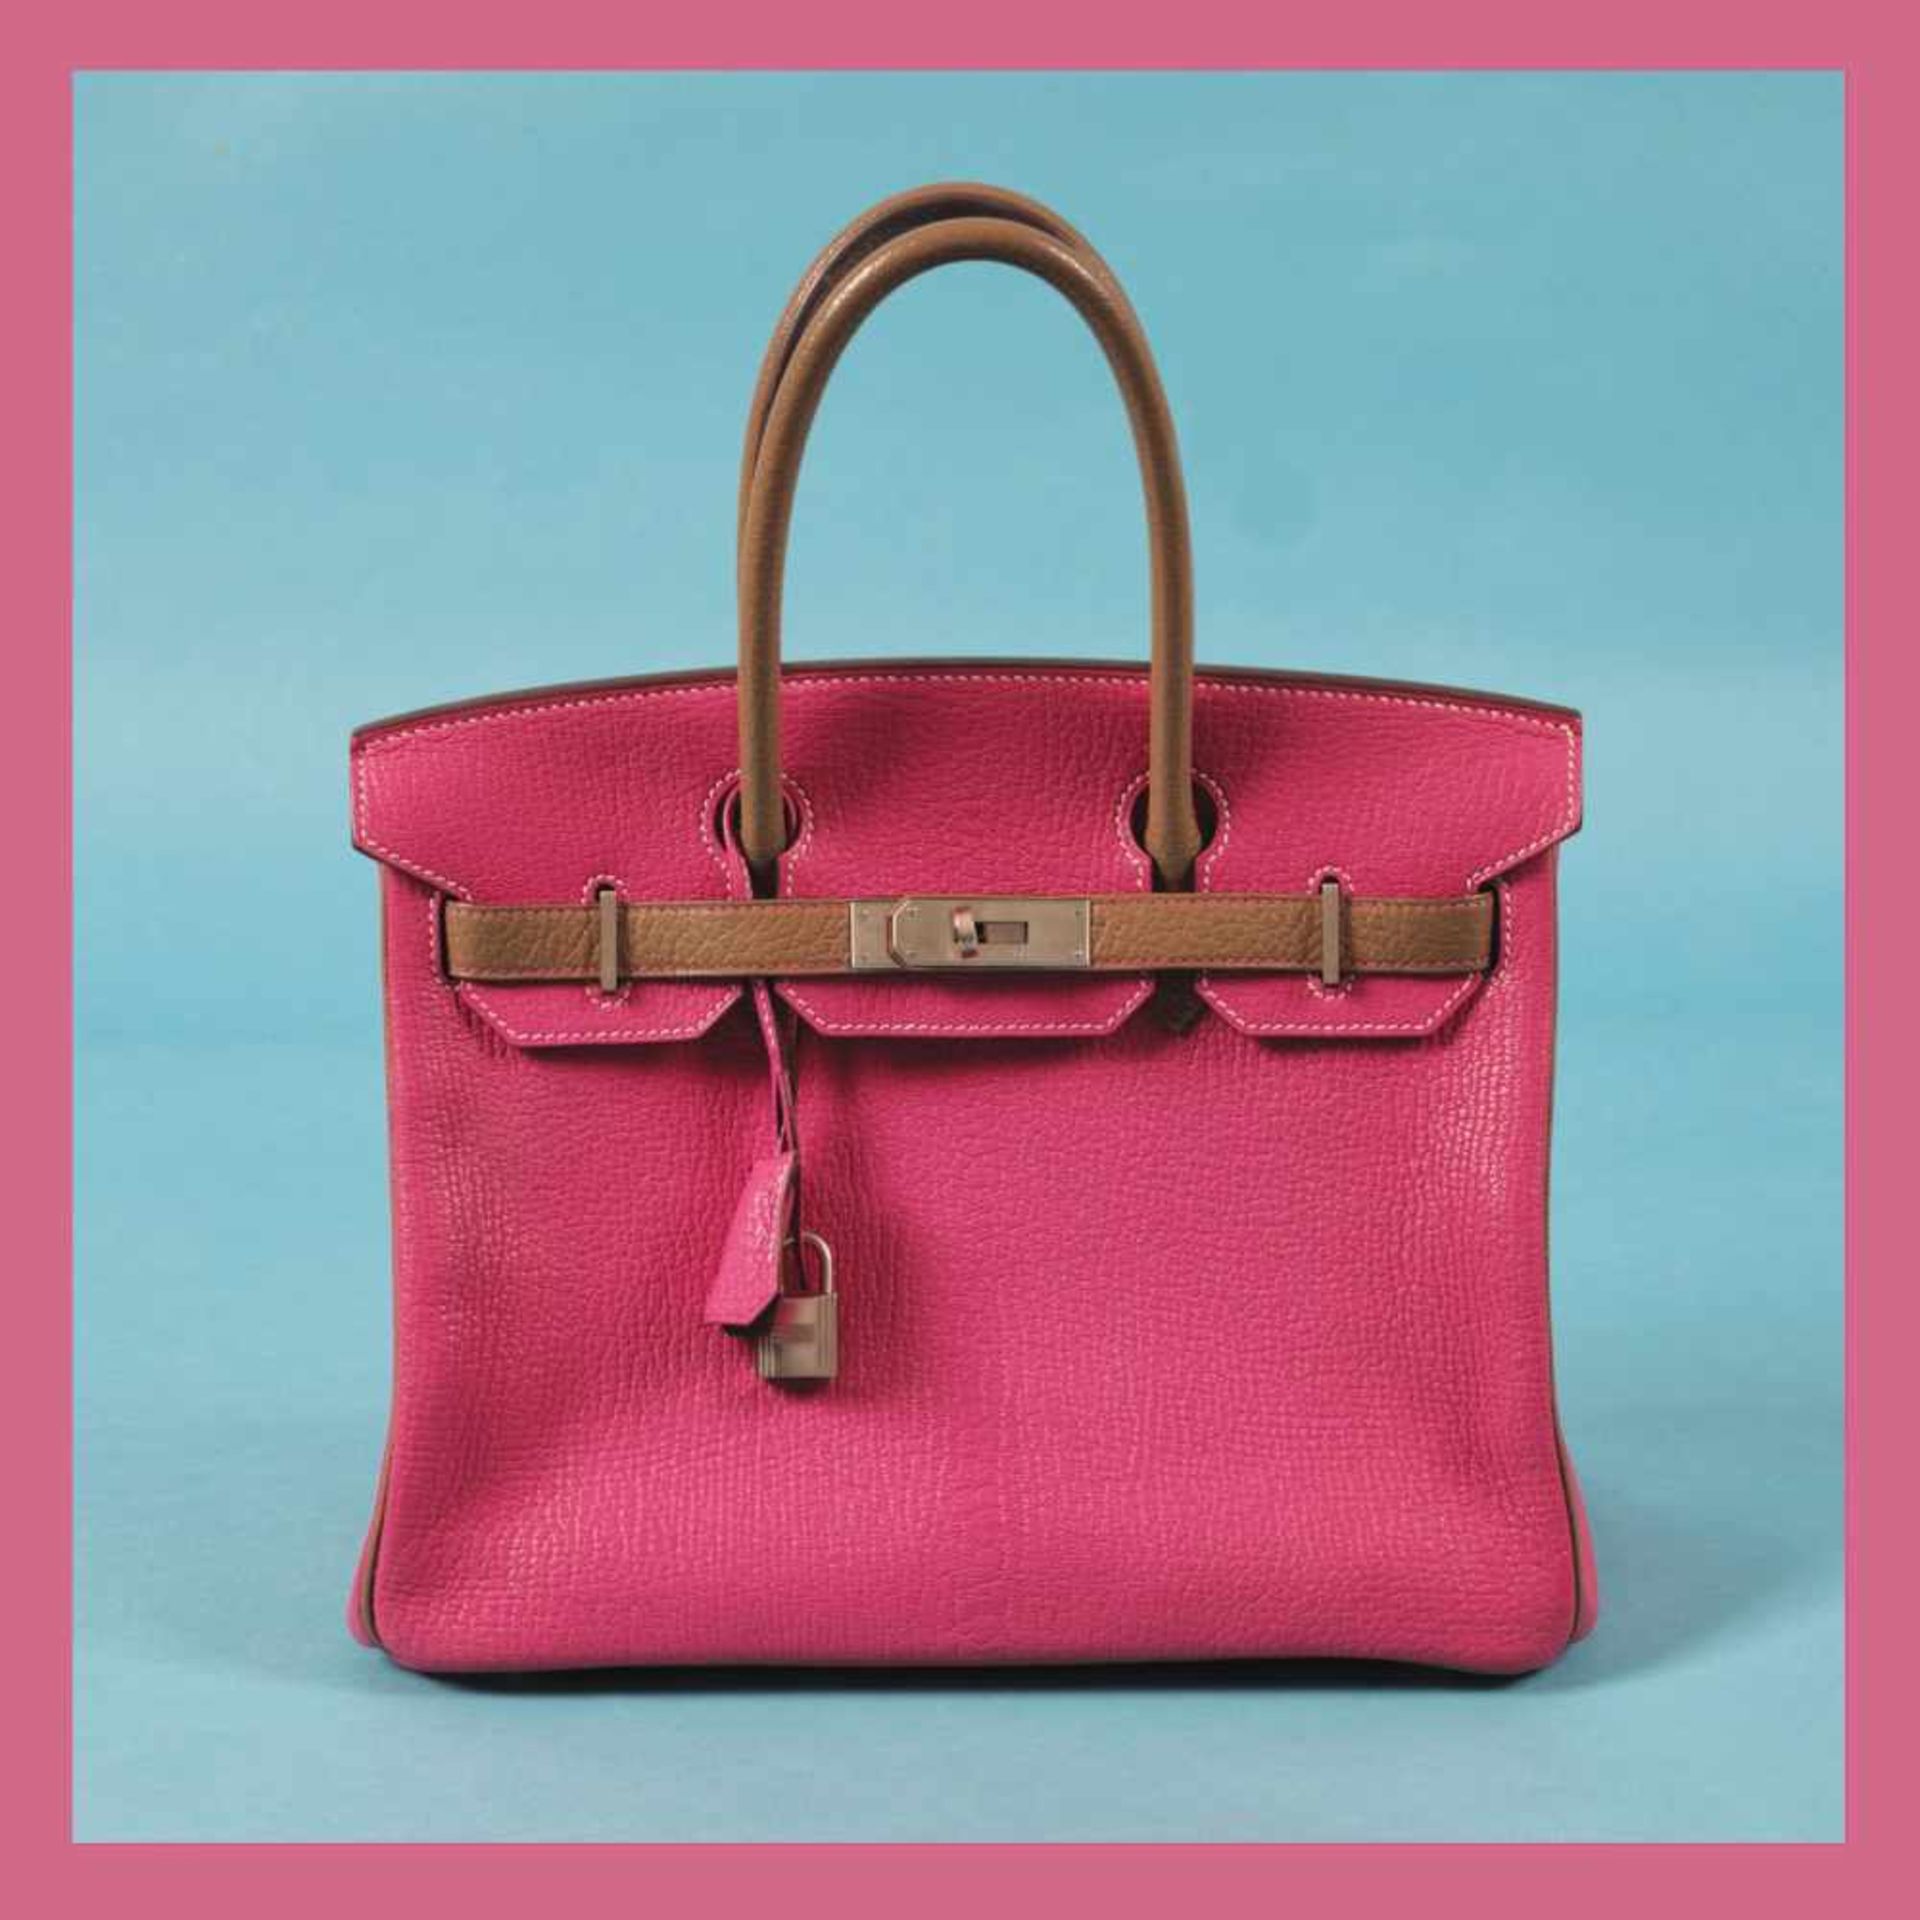 "Birkin 30" - Hermès special order bag, Chèvre leather, colour Rose Pourpre, for women, limited ed